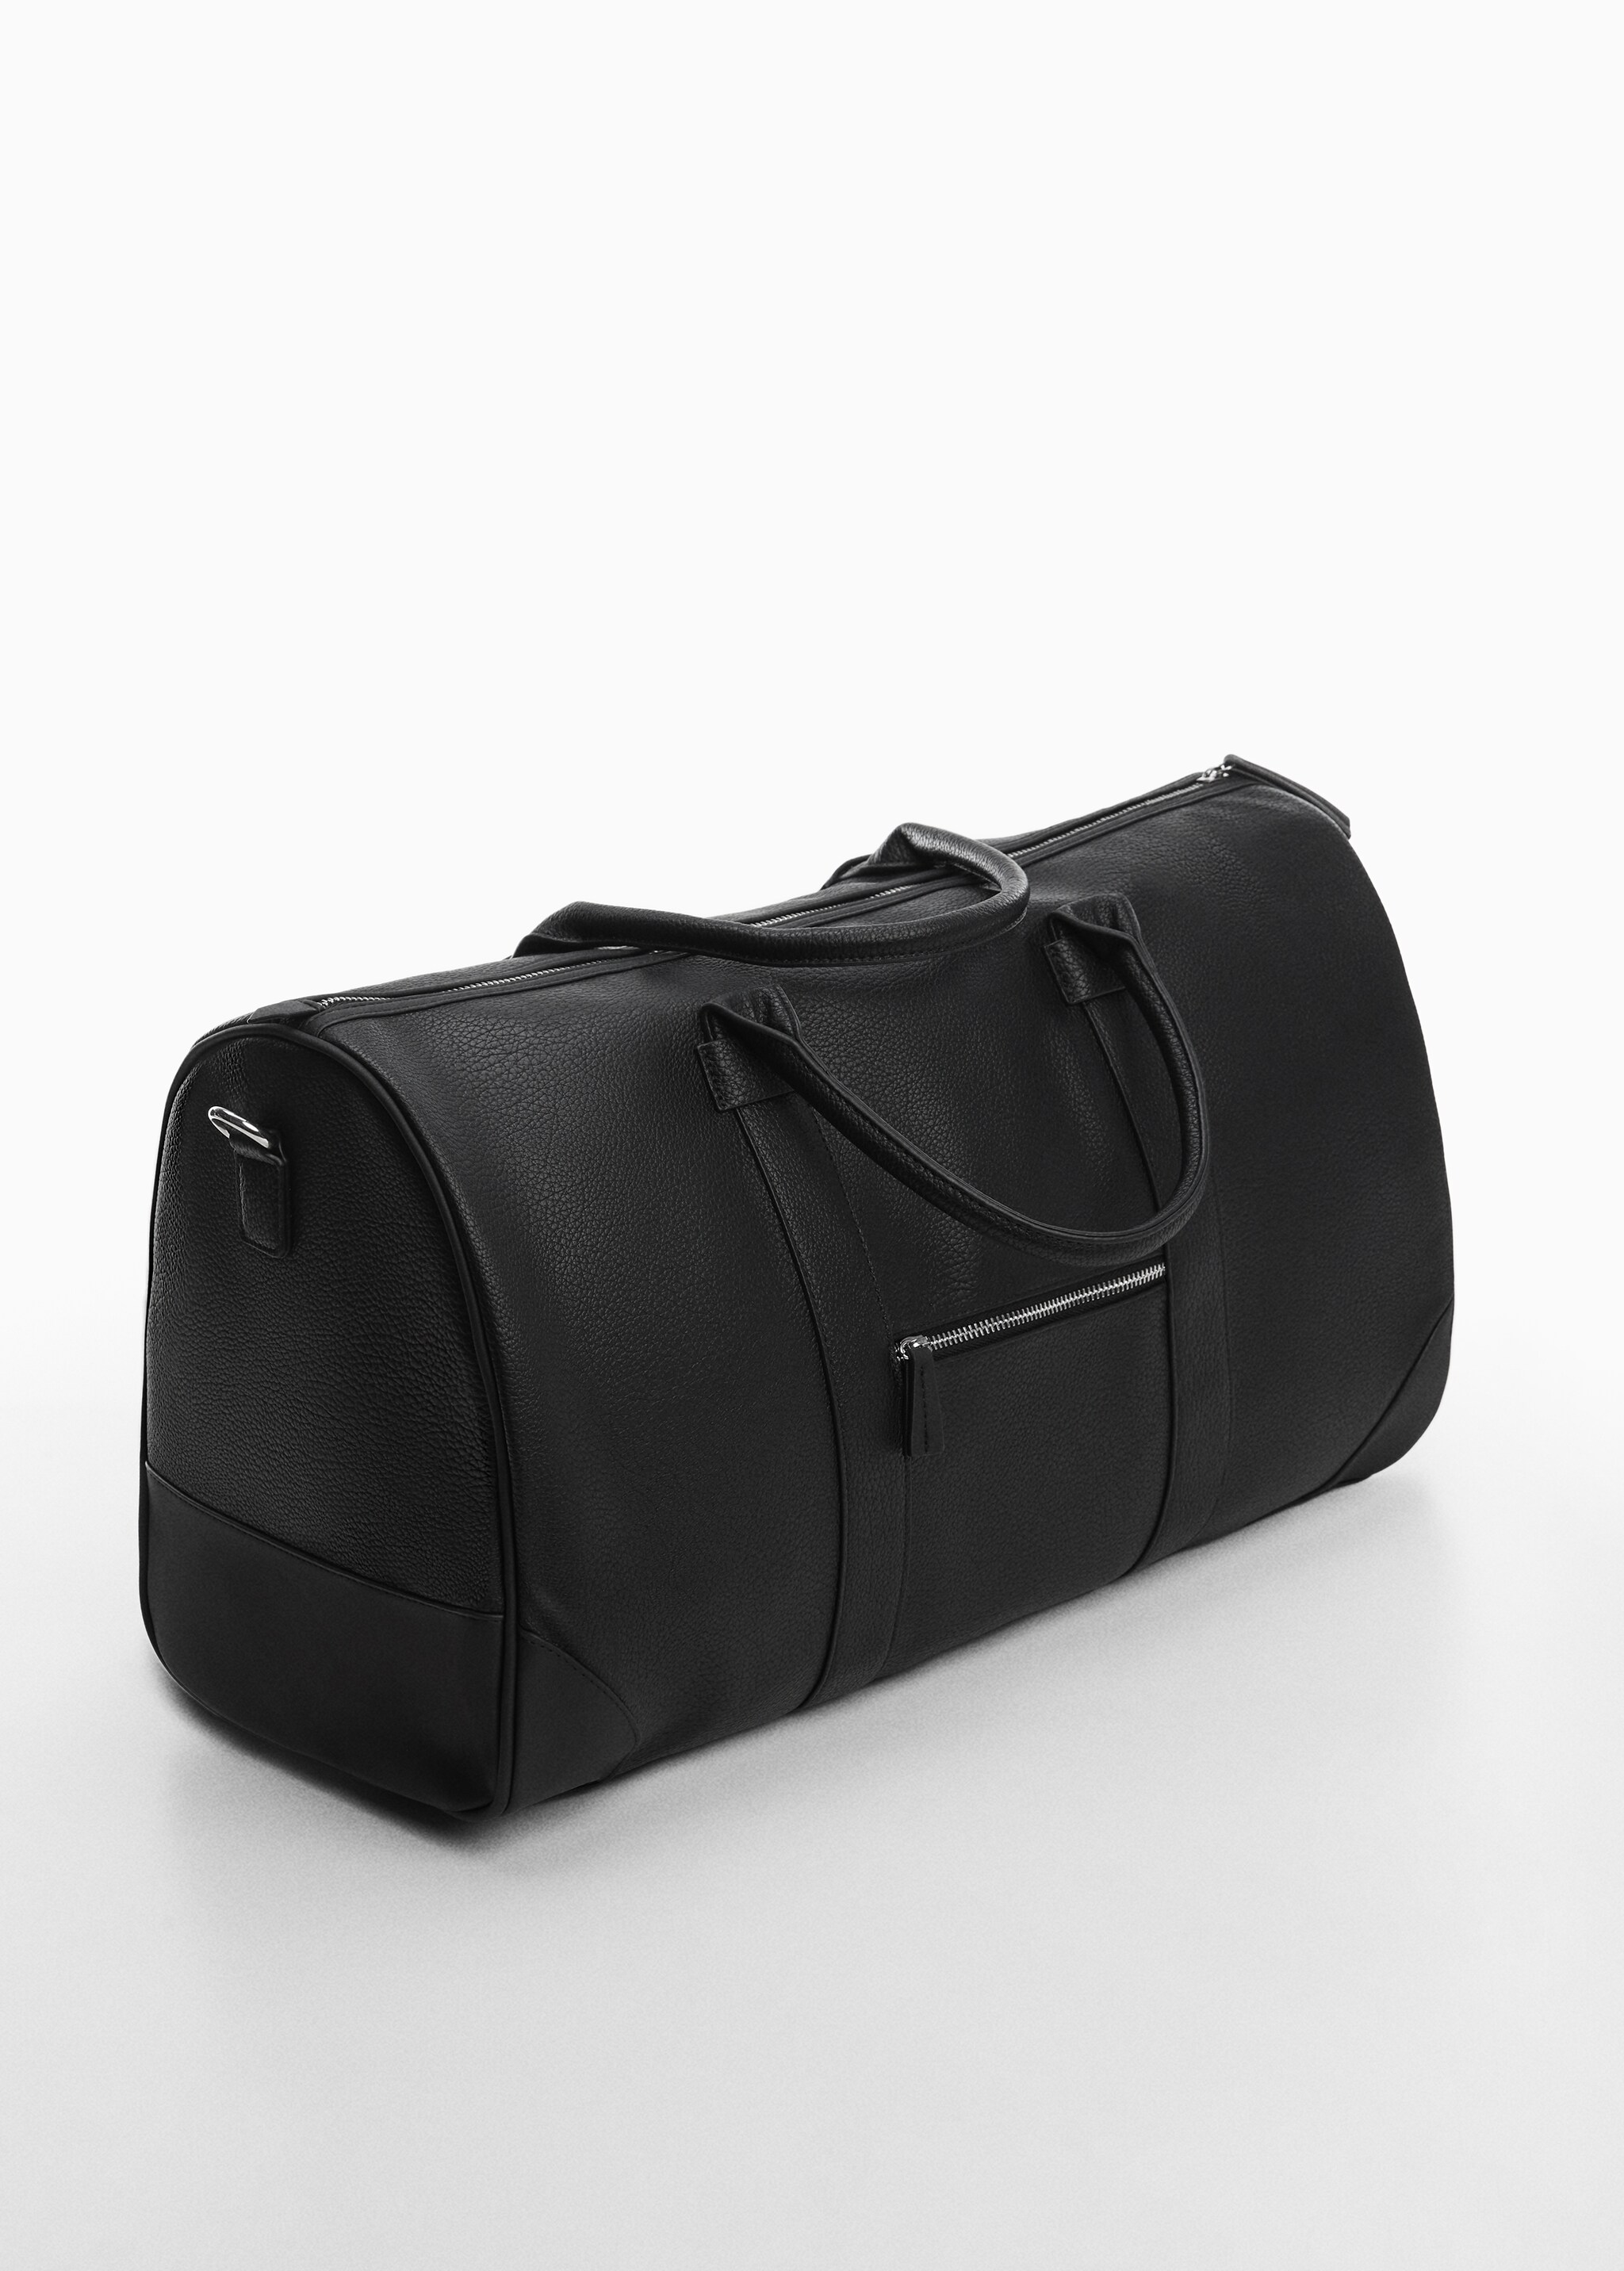 Patent leather-effect bowling bag - Medium plane